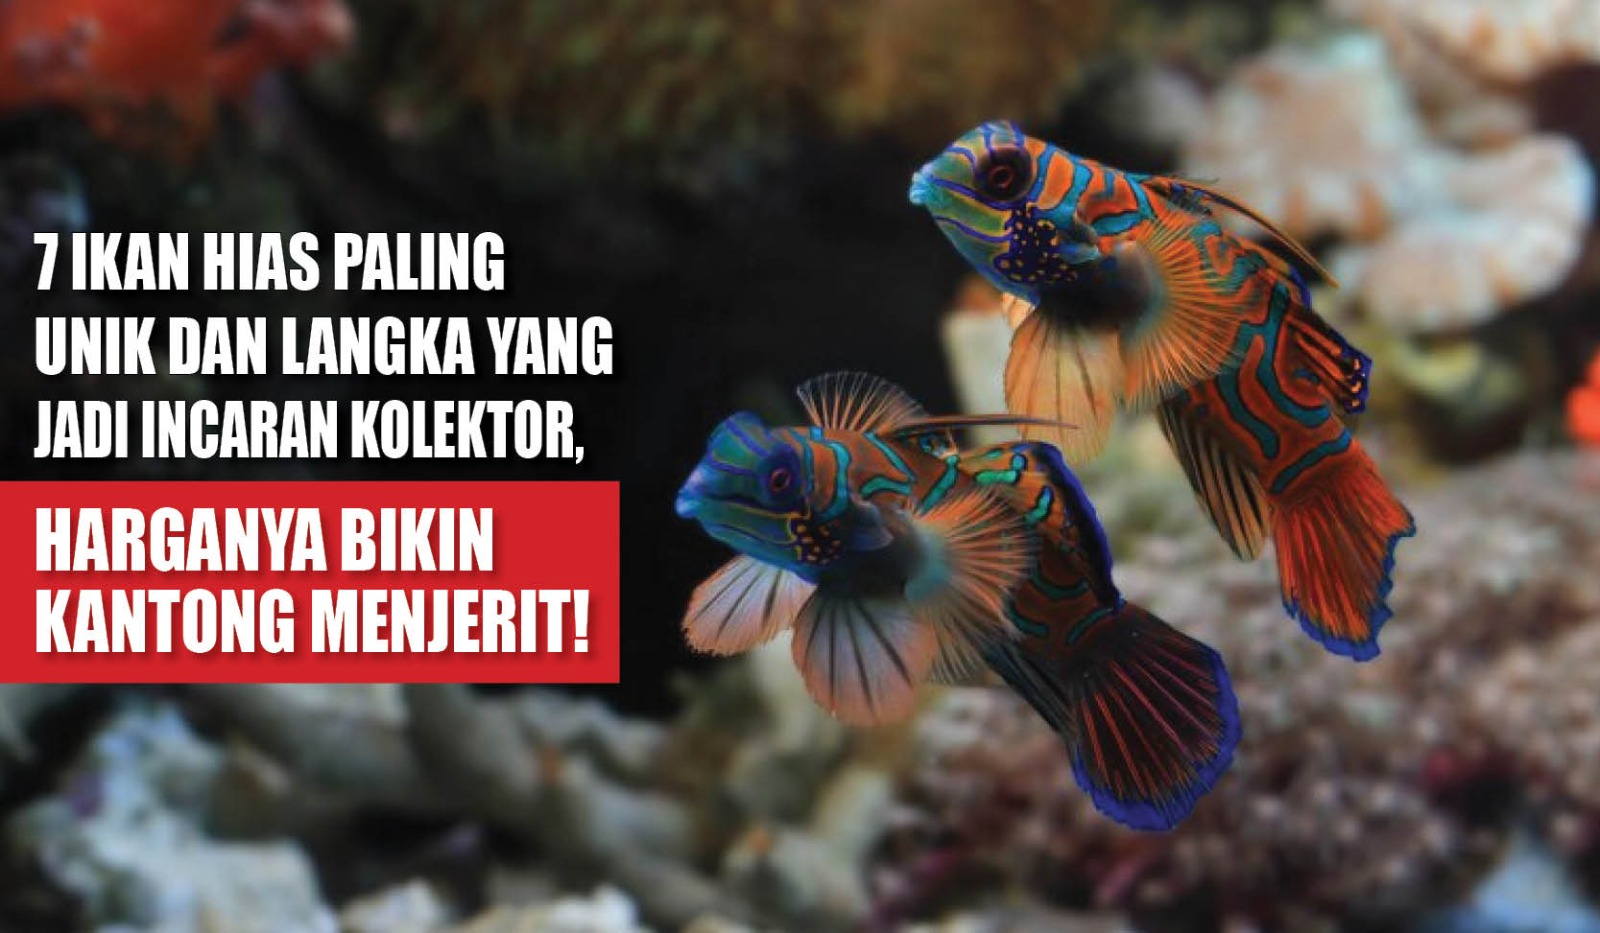 7 Ikan Hias Paling Unik dan Langka yang Jadi Incaran Kolektor, Harganya Bikin Kantong Menjerit!